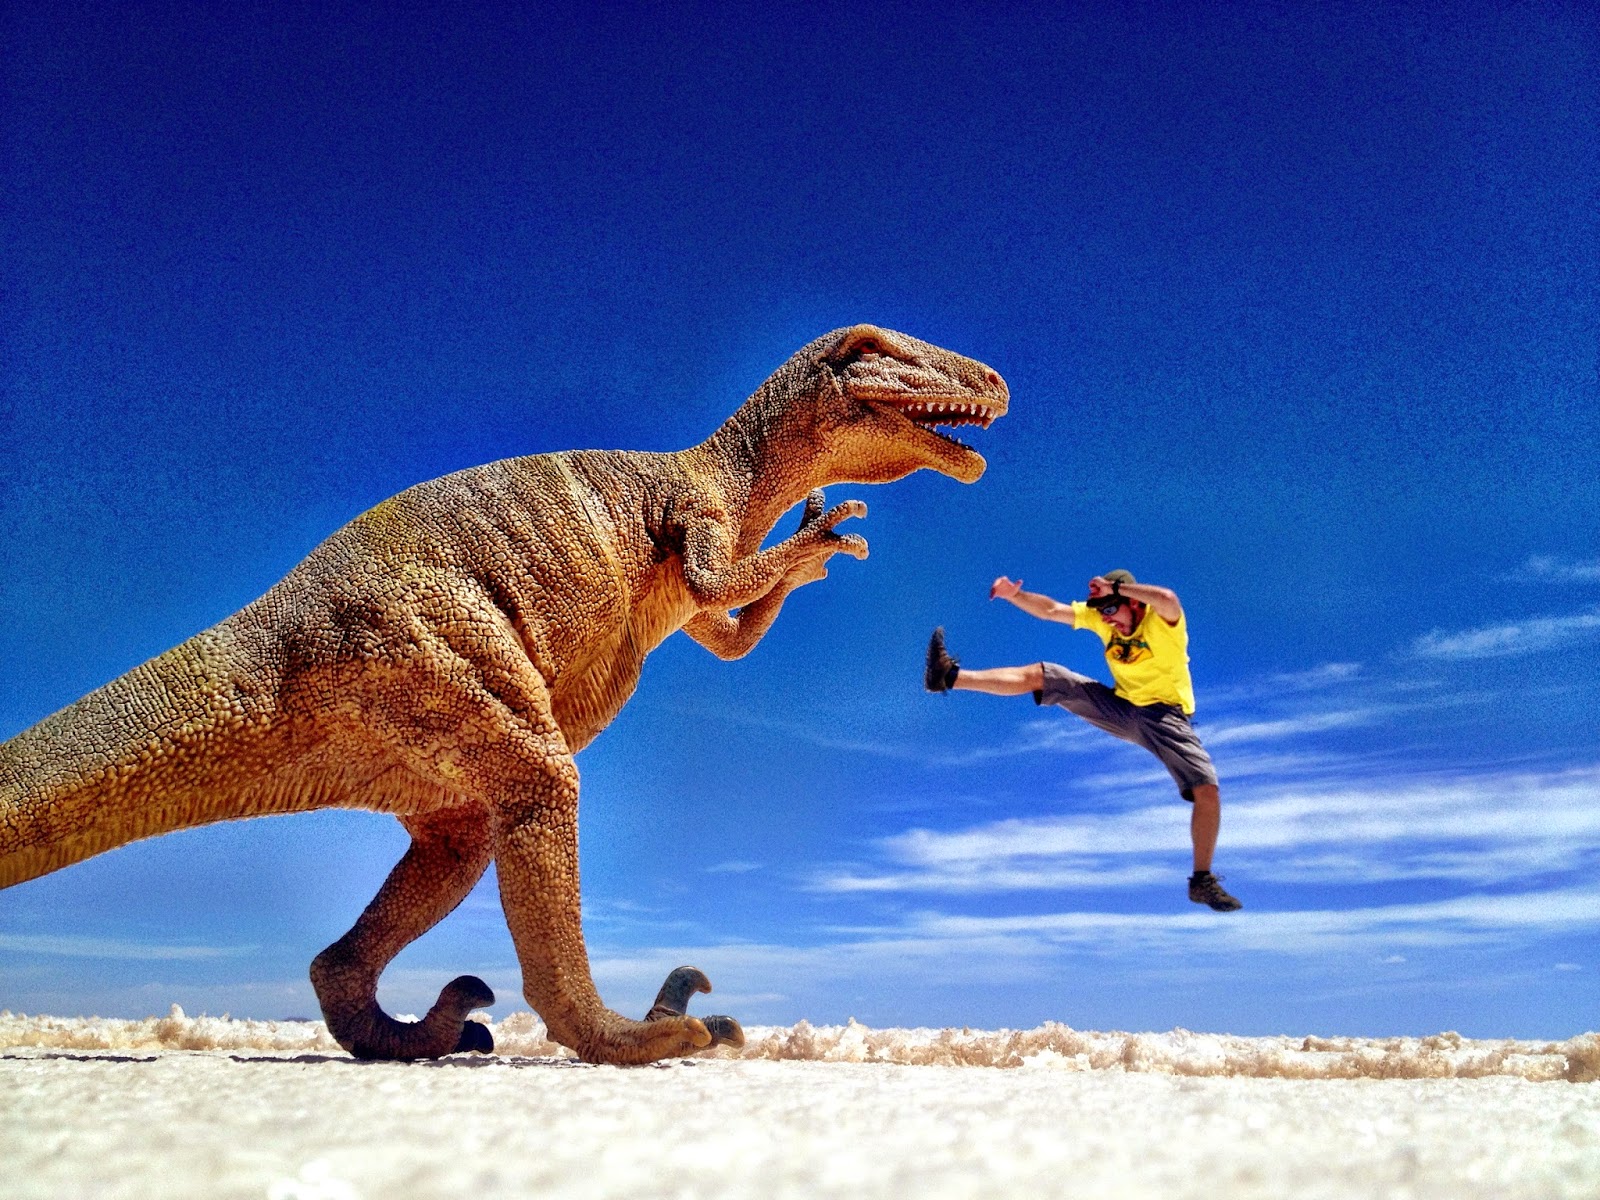 Simon Heyes - kicking dinosaur ass in the Salar de Uyuni